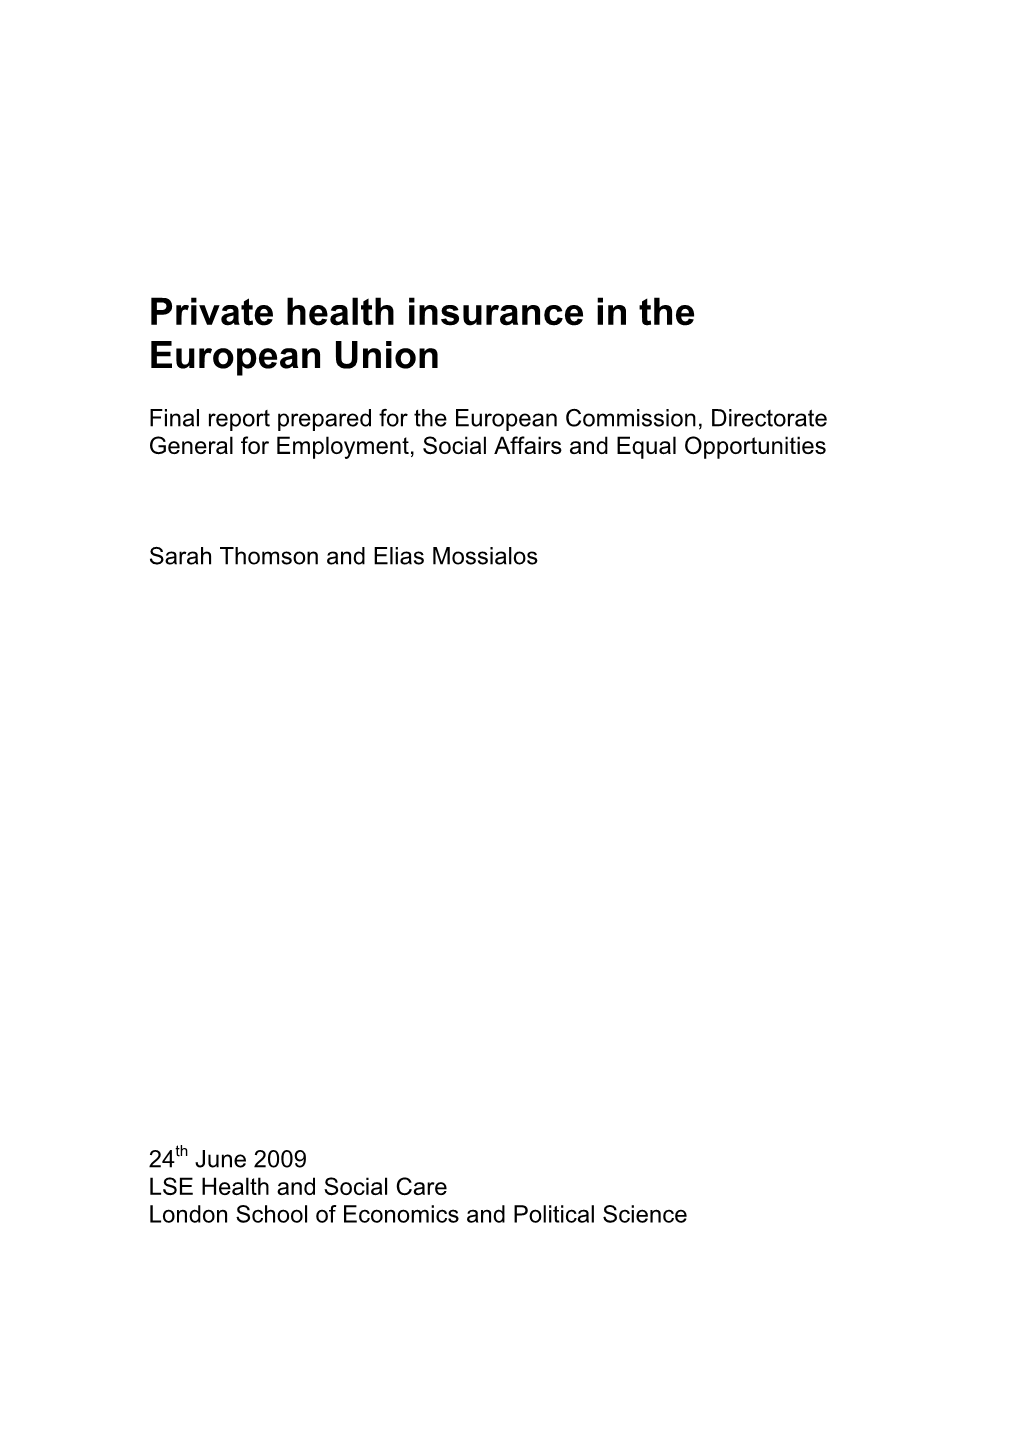 Private Health Insurance in the European Union